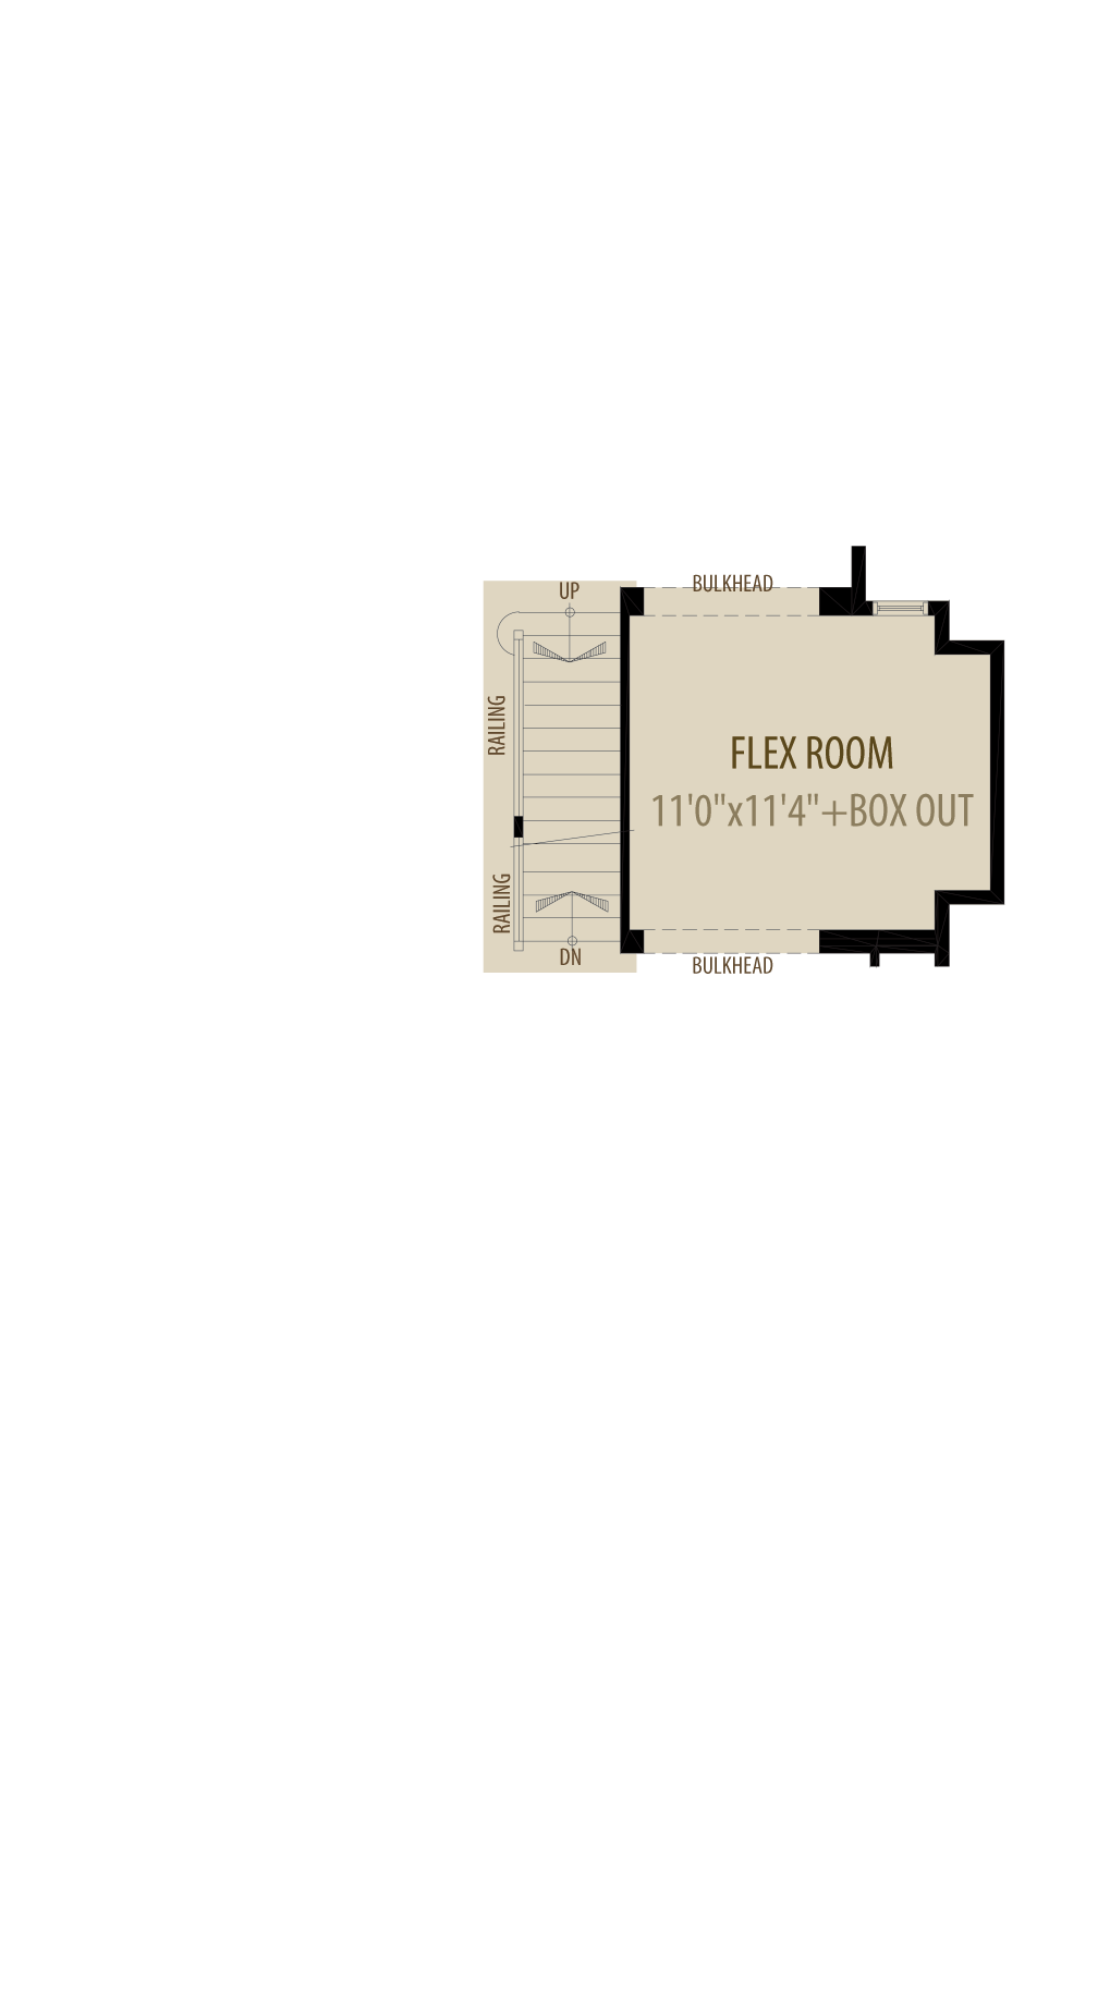 Flex Room Cantilever Adds 19Sq Ft